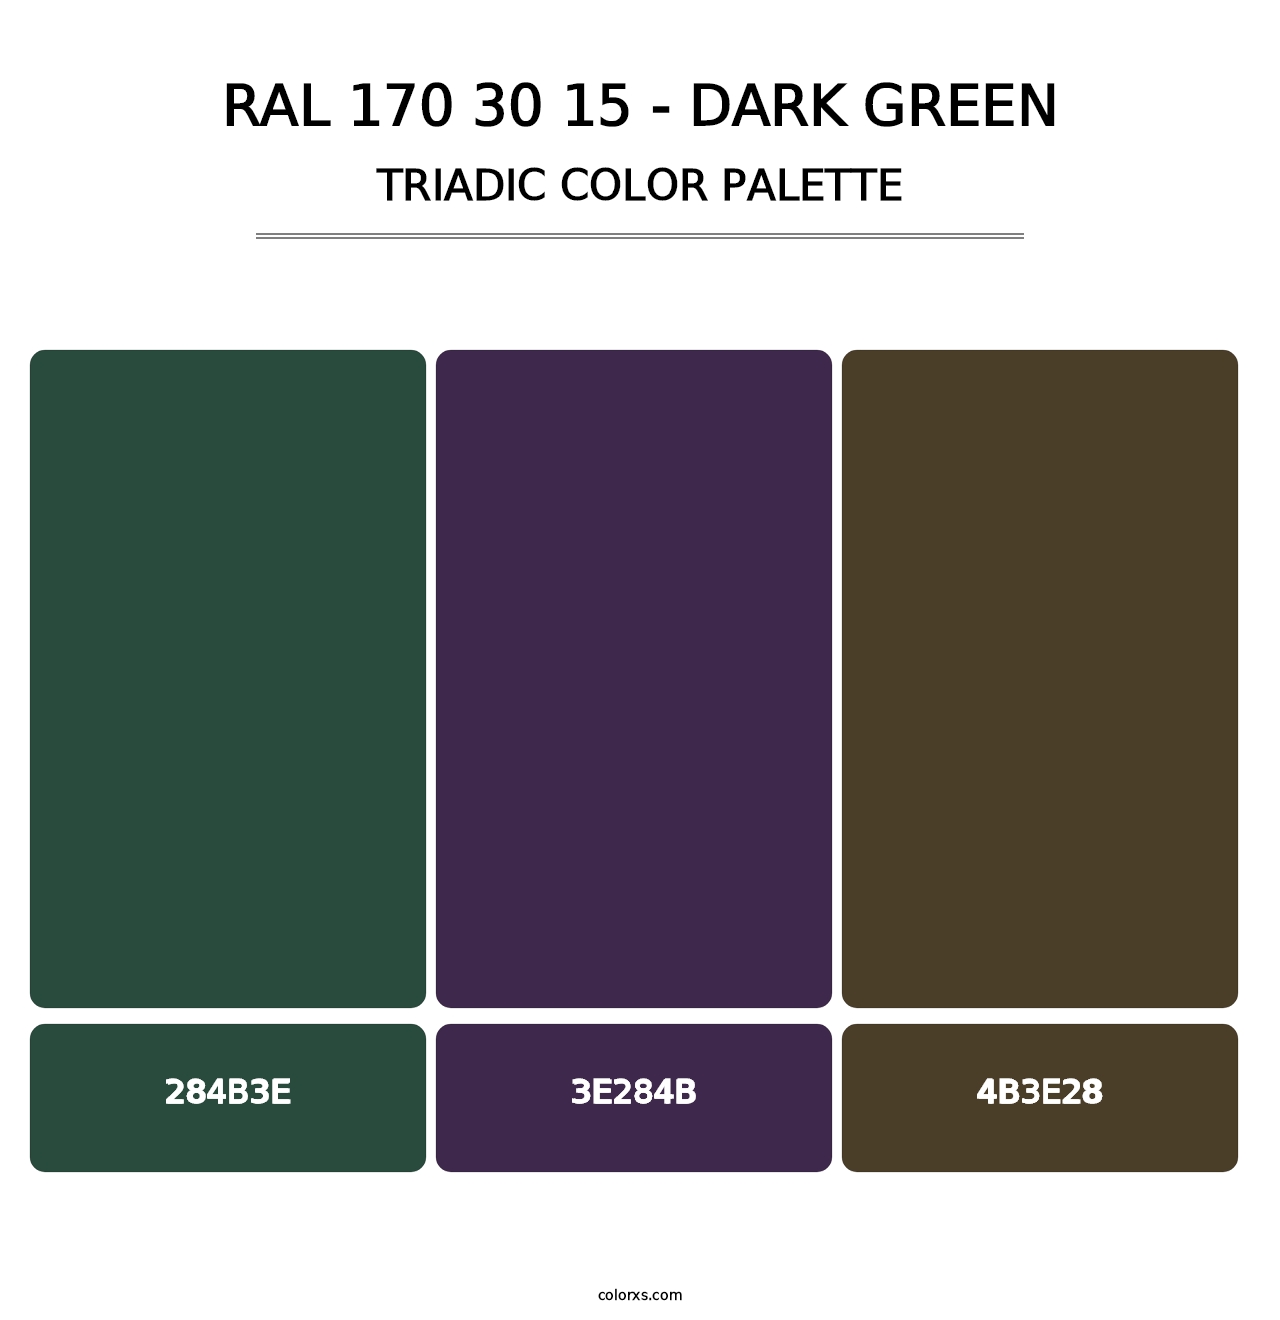 RAL 170 30 15 - Dark Green - Triadic Color Palette